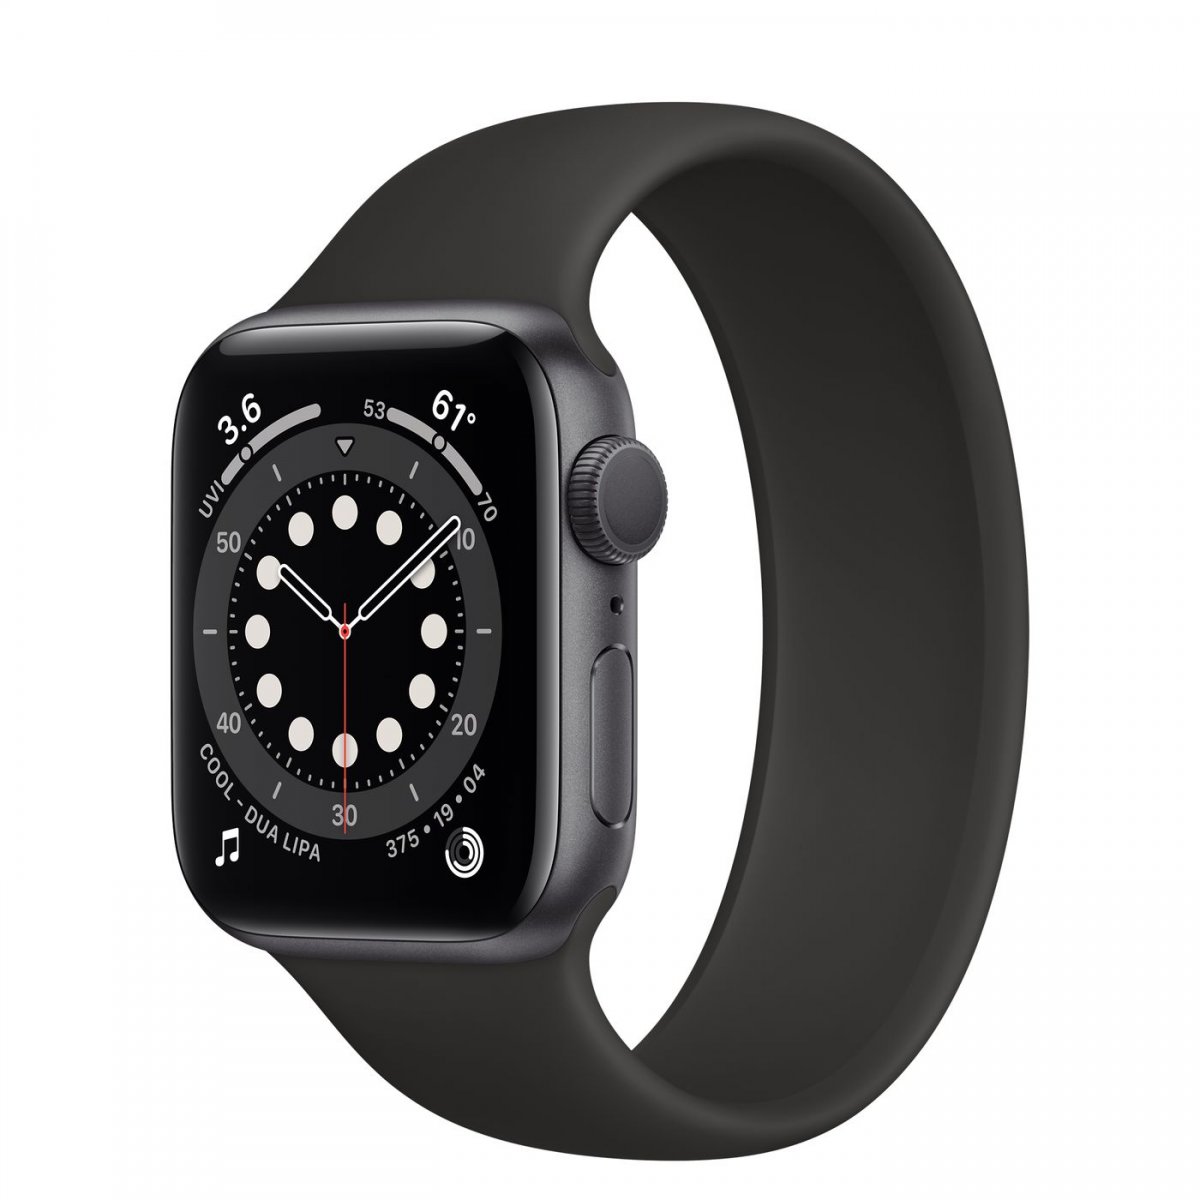 Řemínek iMore Solo Loop Apple Watch Series 1/2/3 38mm - Černá (S)